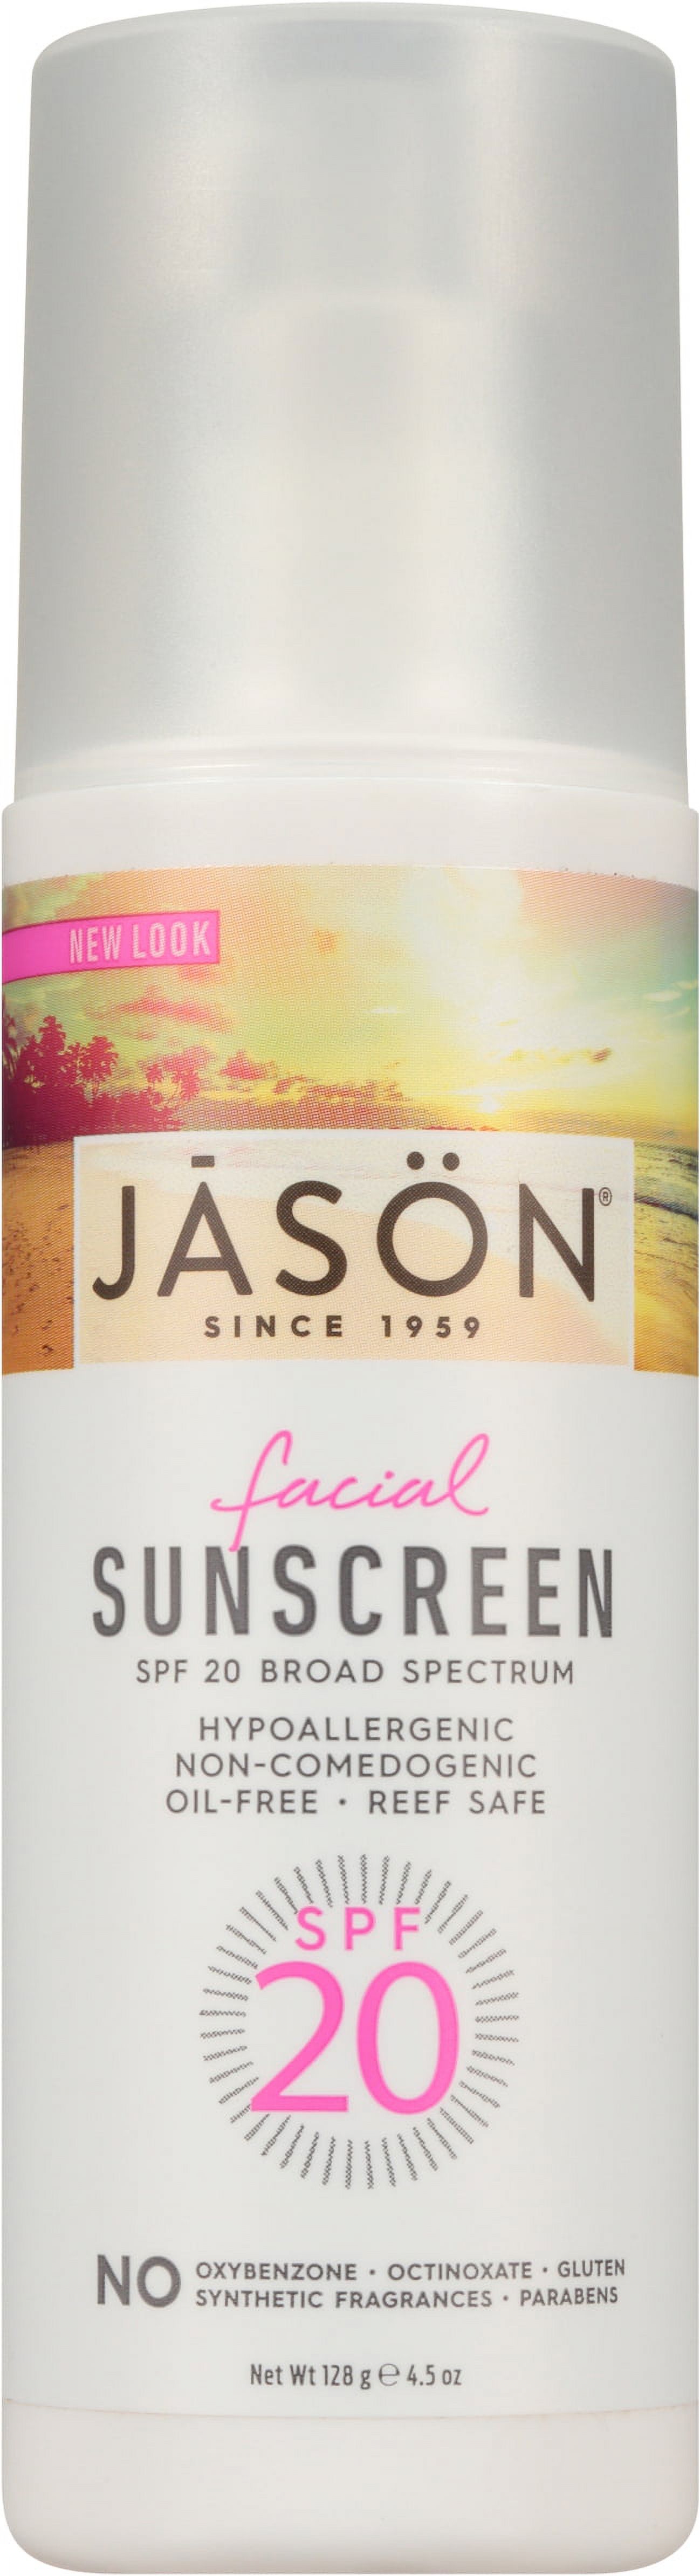 JASON Oil-Free SPF 20 Facial Sunscreen, 4.5 oz. - image 2 of 3